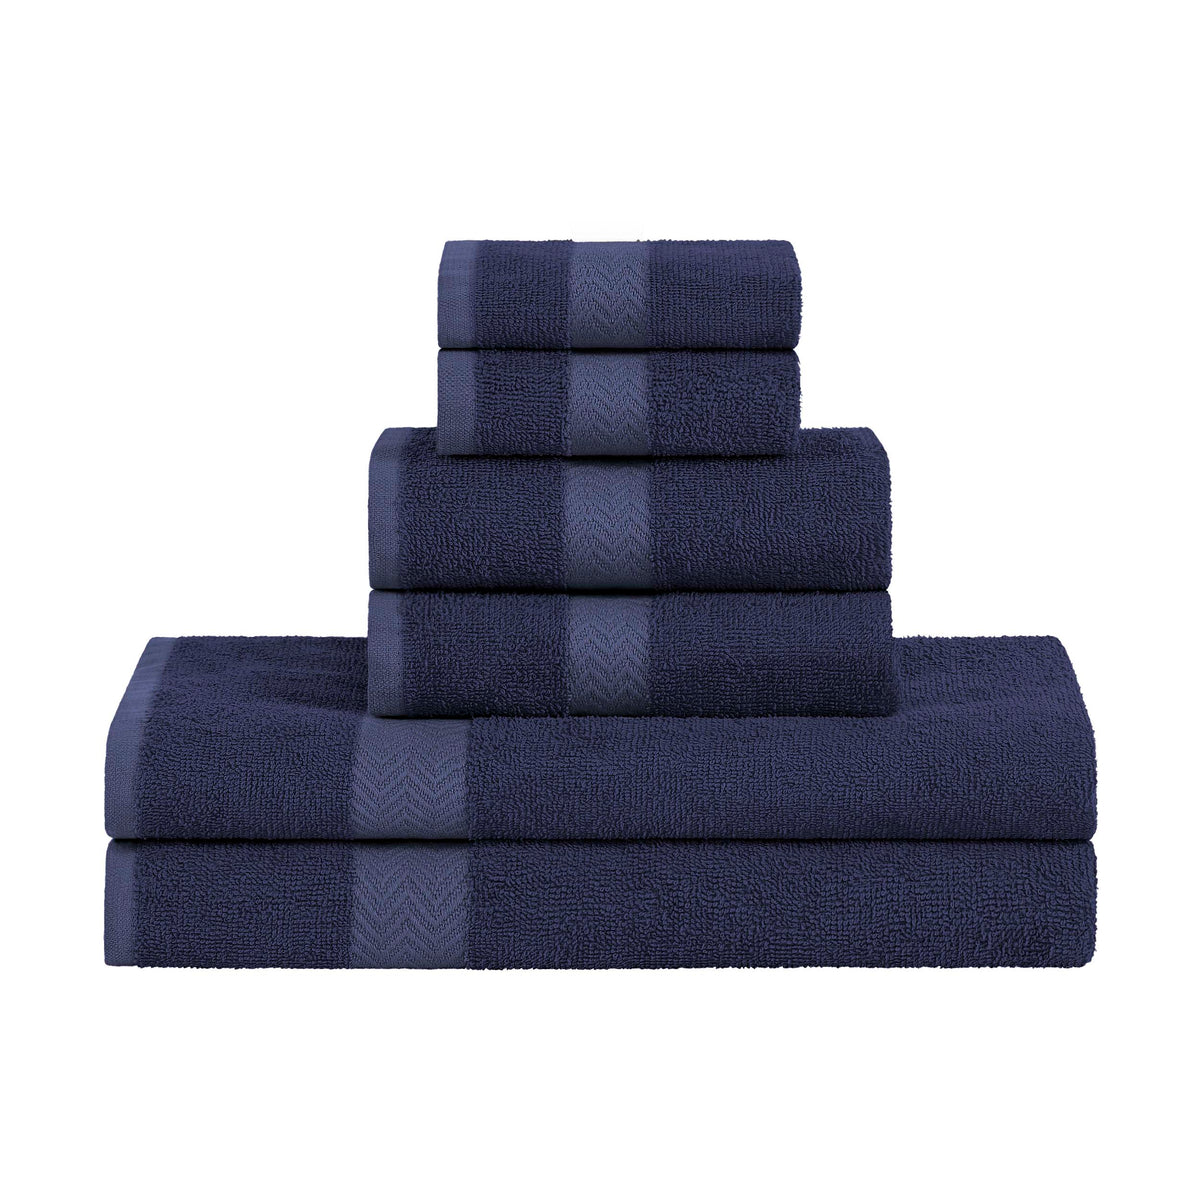 6 Piece Cotton Eco-Friendly Soft Absorbent Towel Set